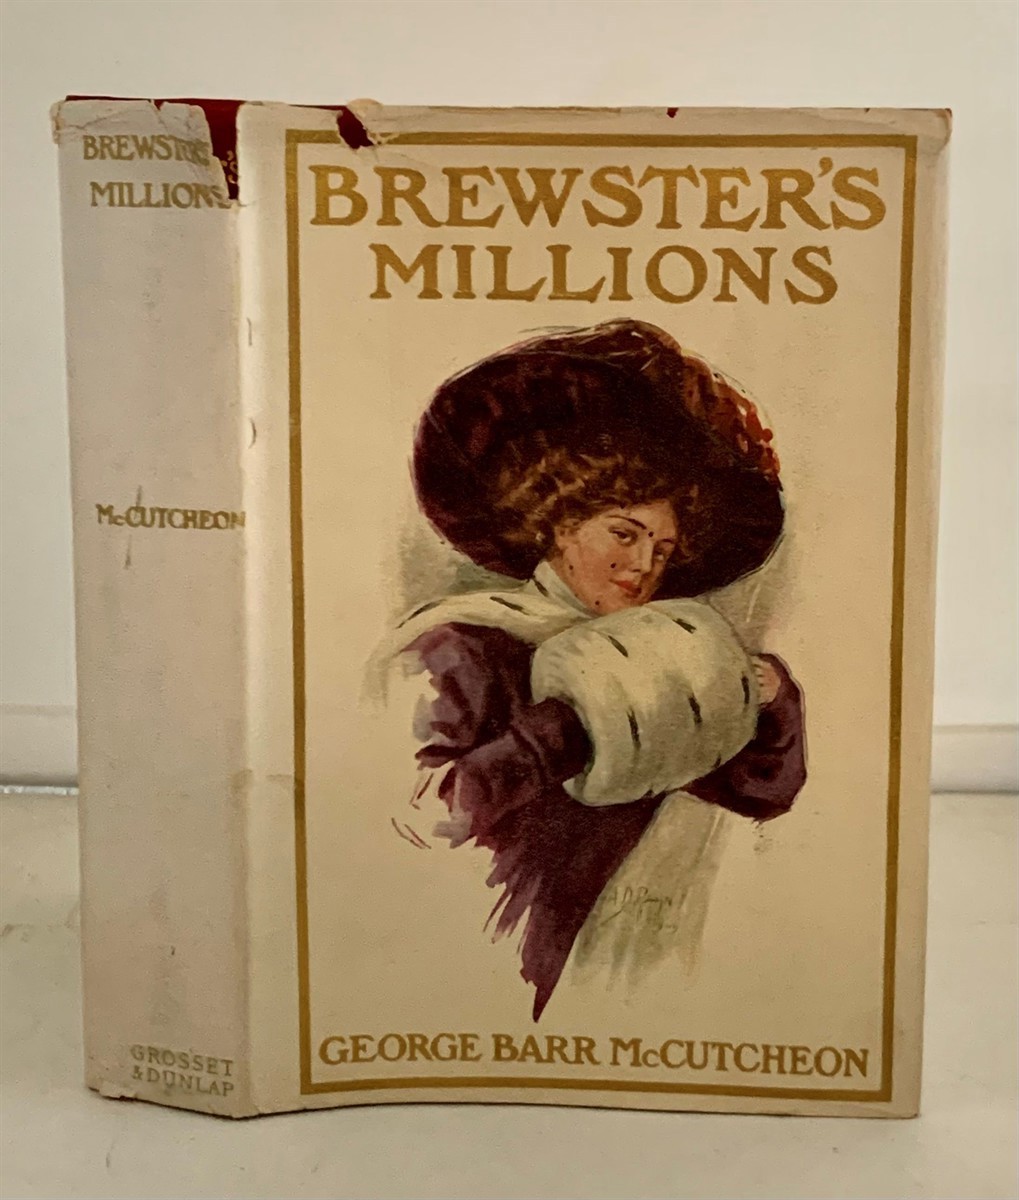 MCCUTCHEON, GEORGE BARR - Brewster's Millions